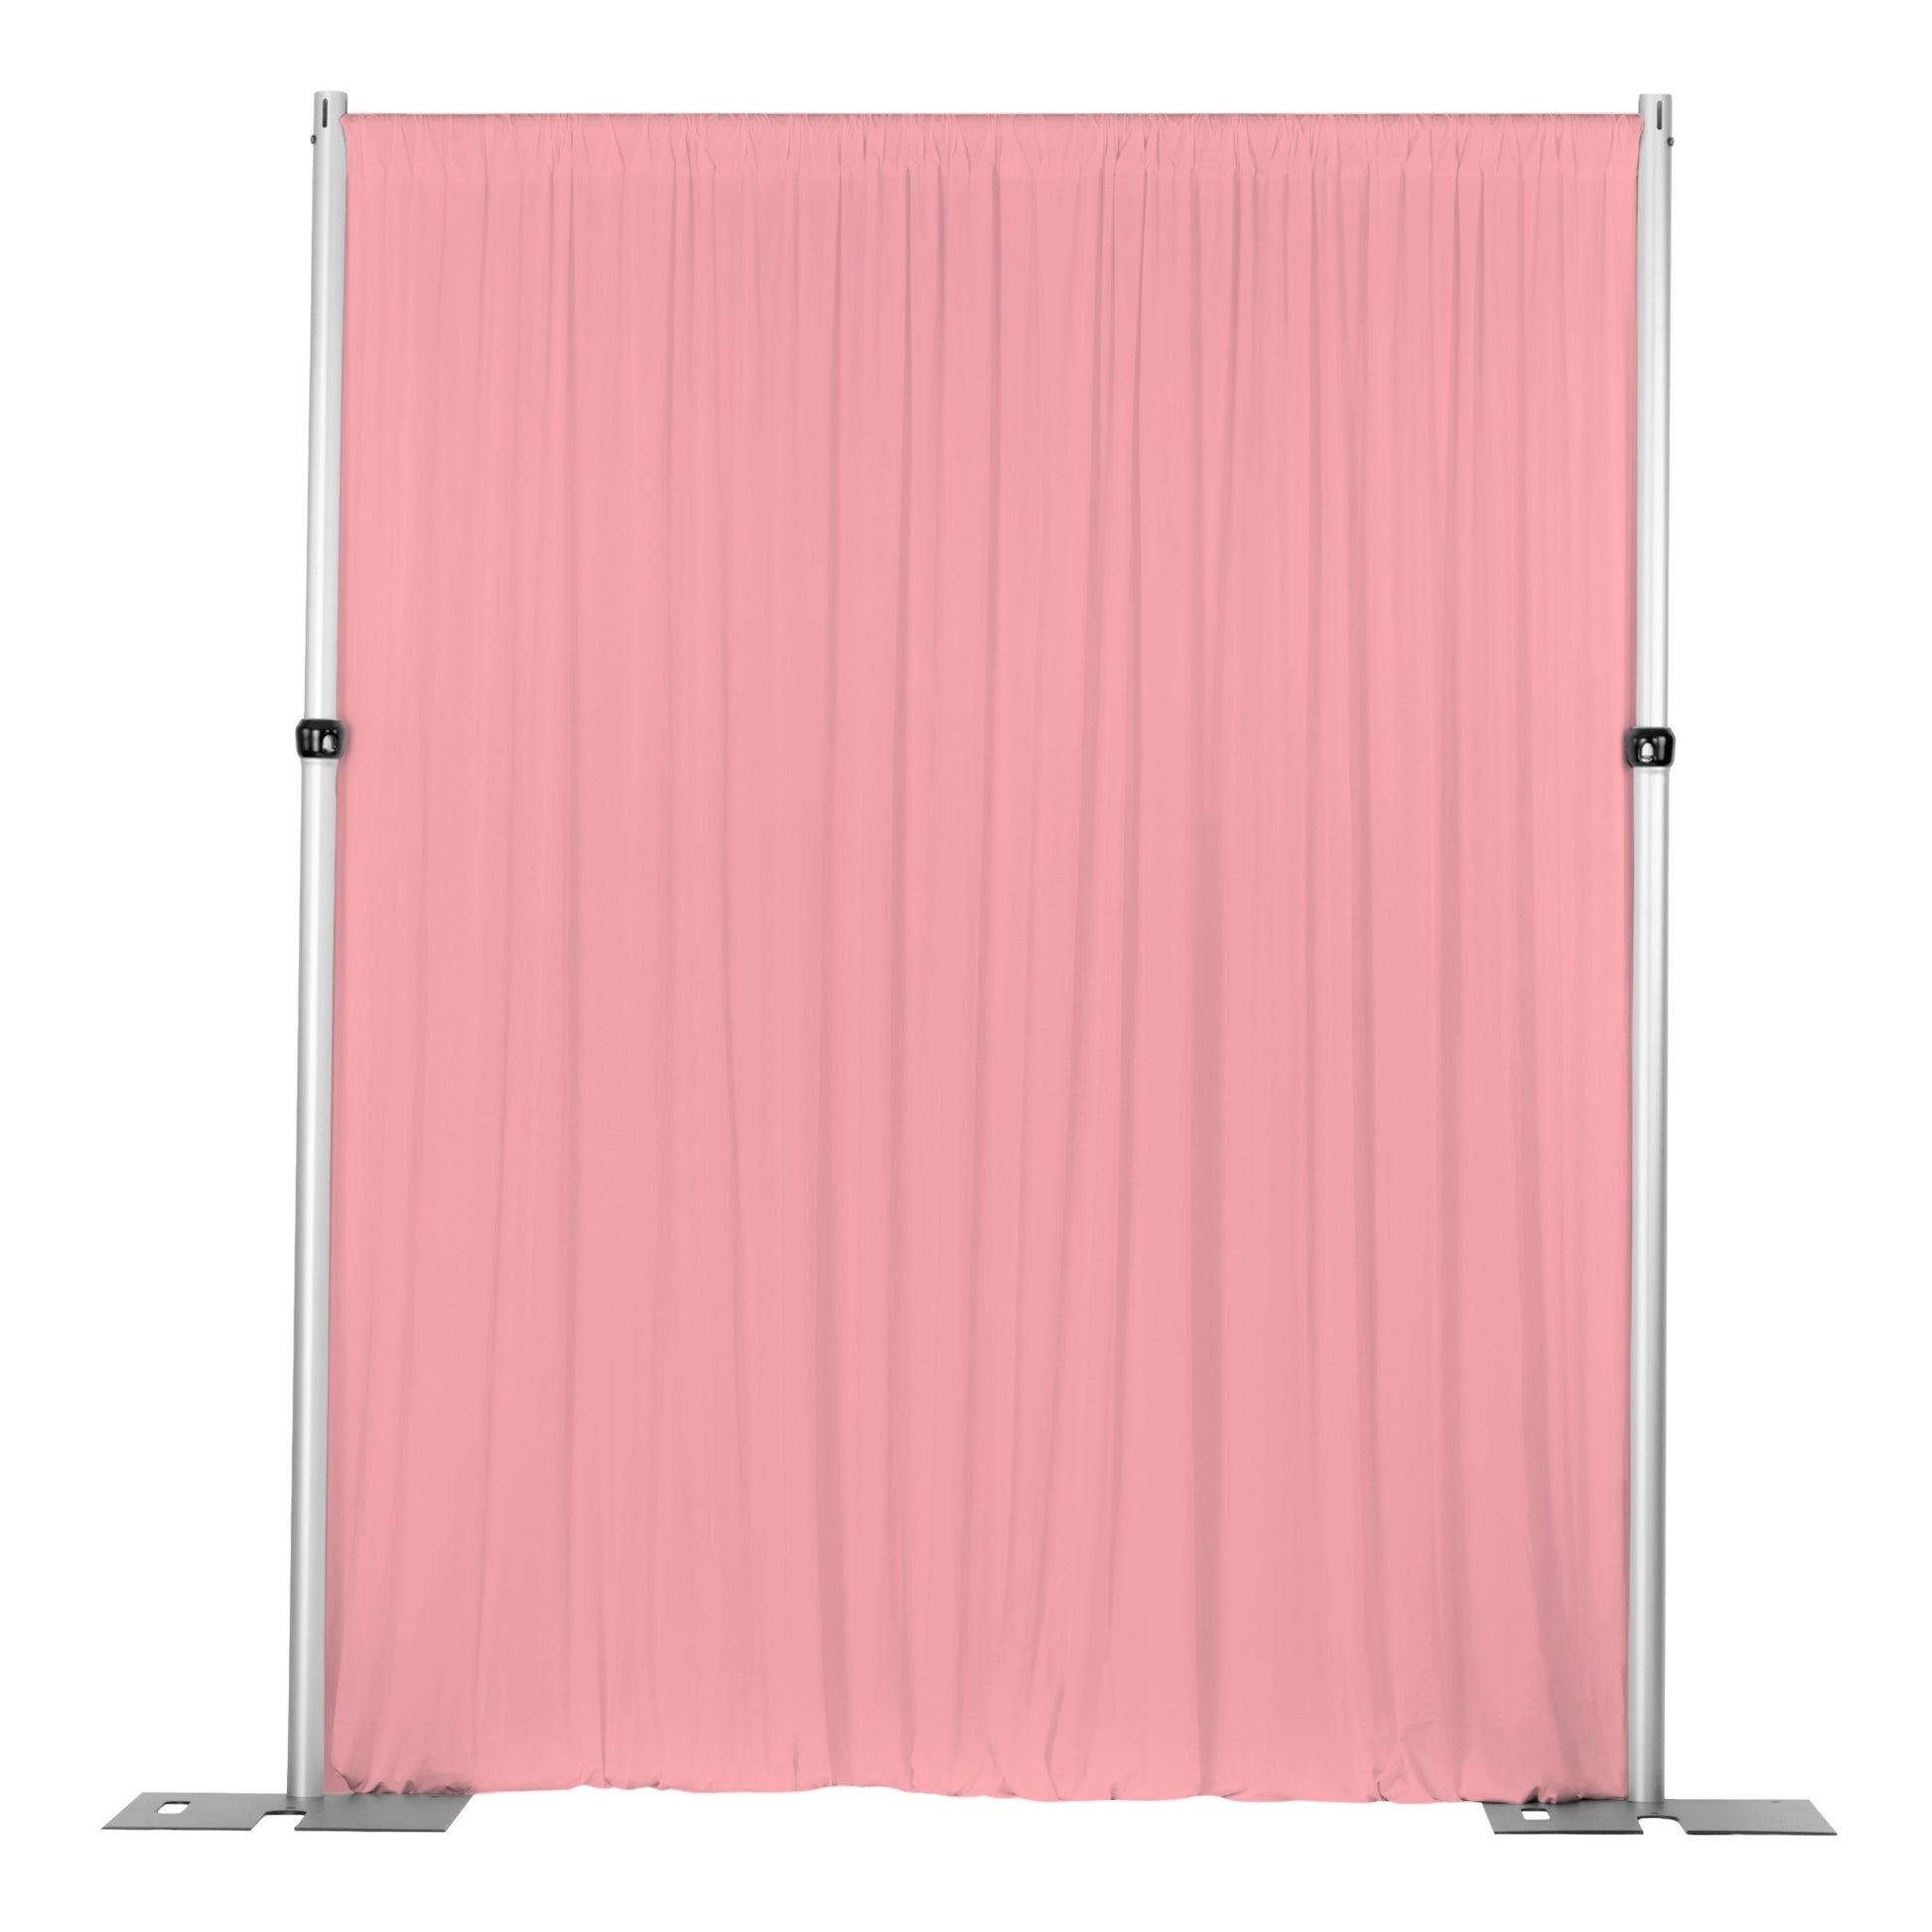 Spandex 4-way Stretch Drape Curtain 10ft H x 60" W - Dusty Rose/Mauve